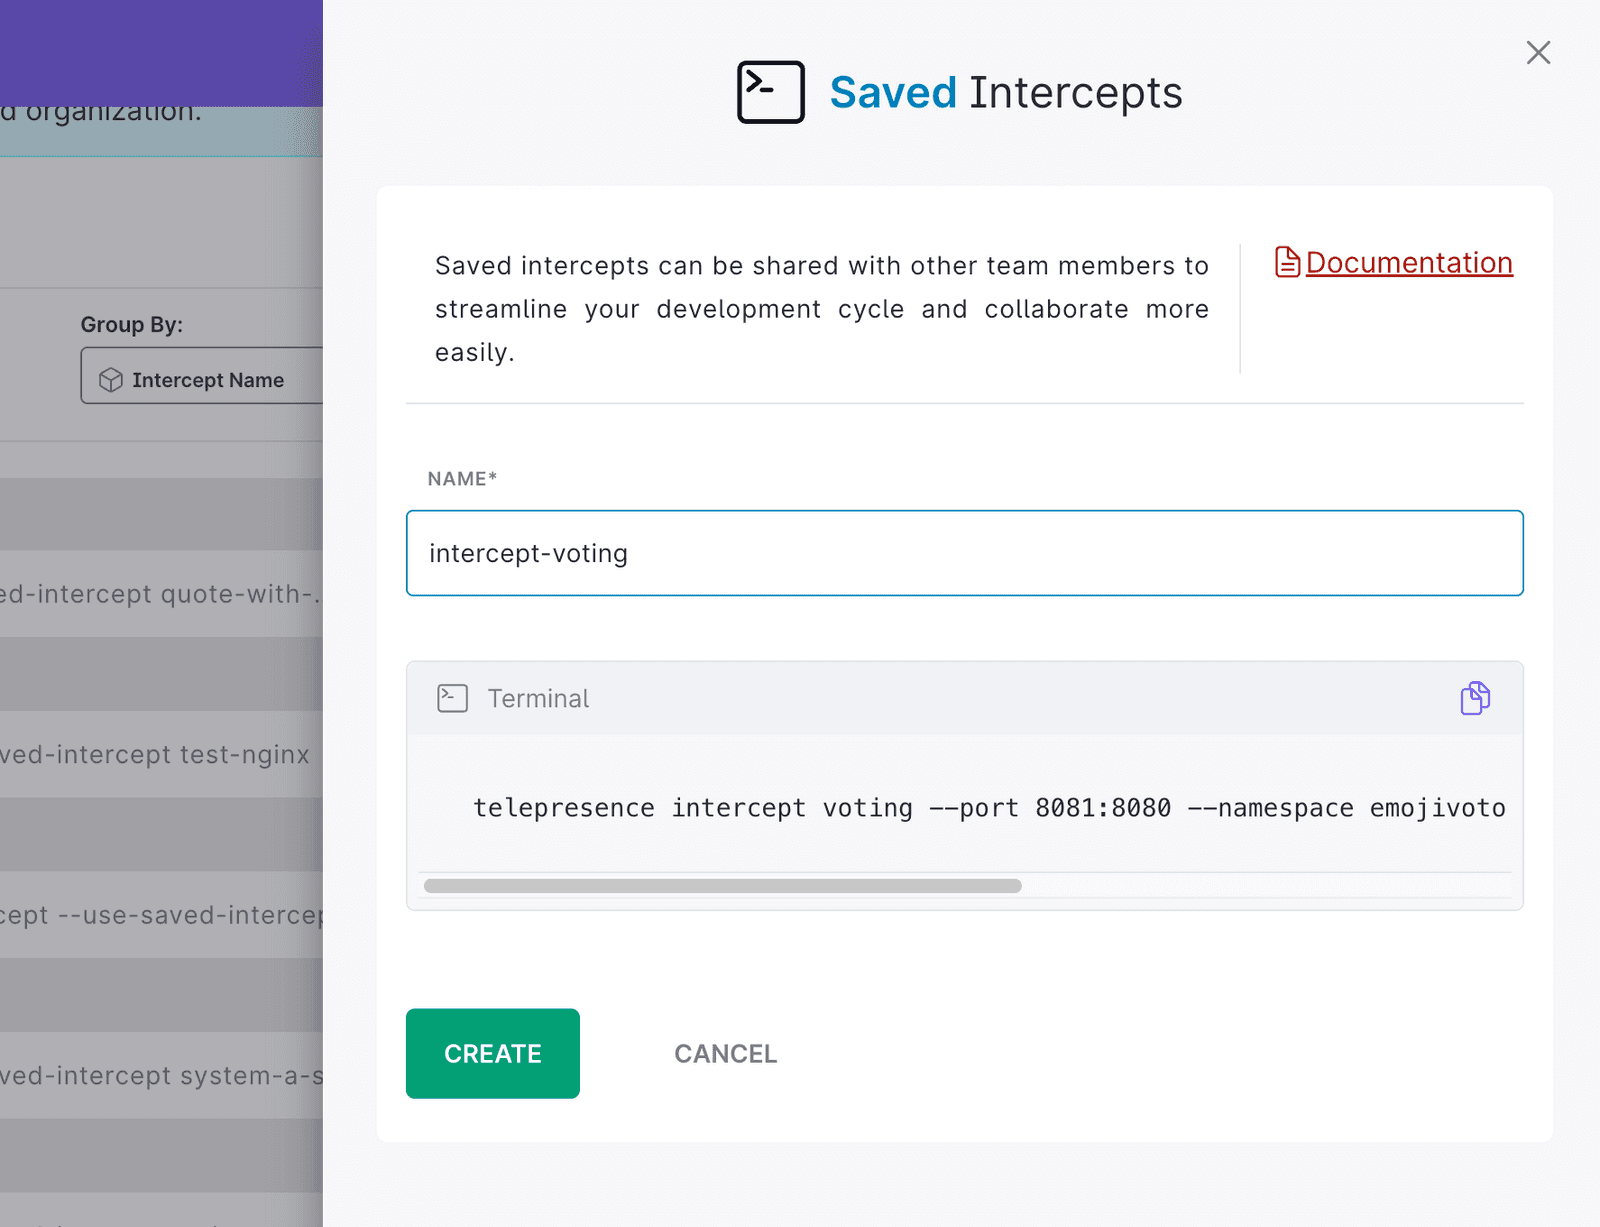 saved-intercepts-form